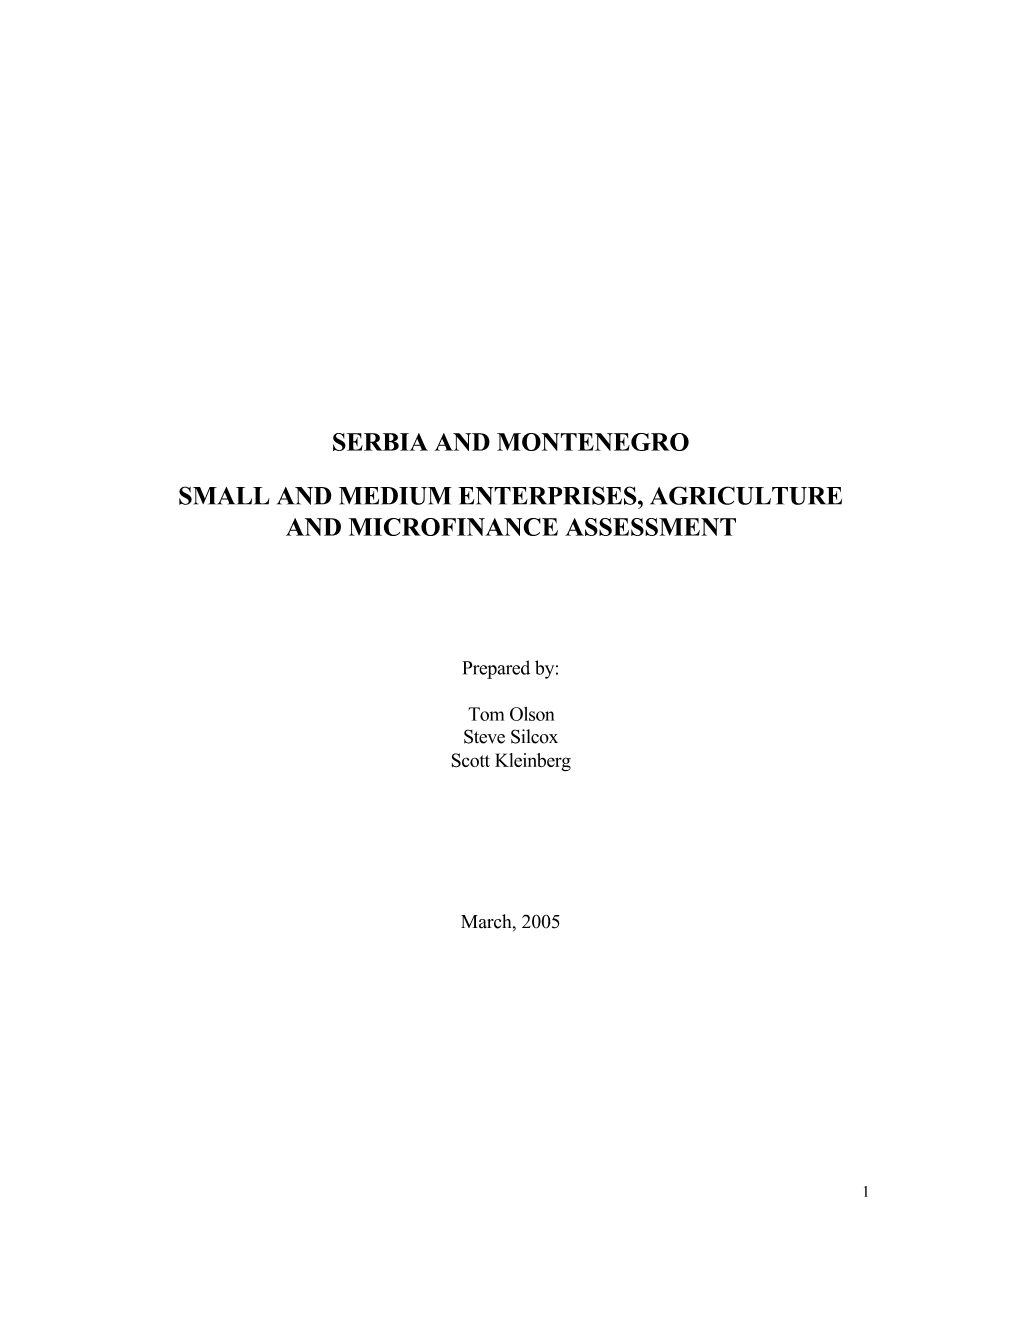 Serbia and Montenegro Small and Medium Enterprises